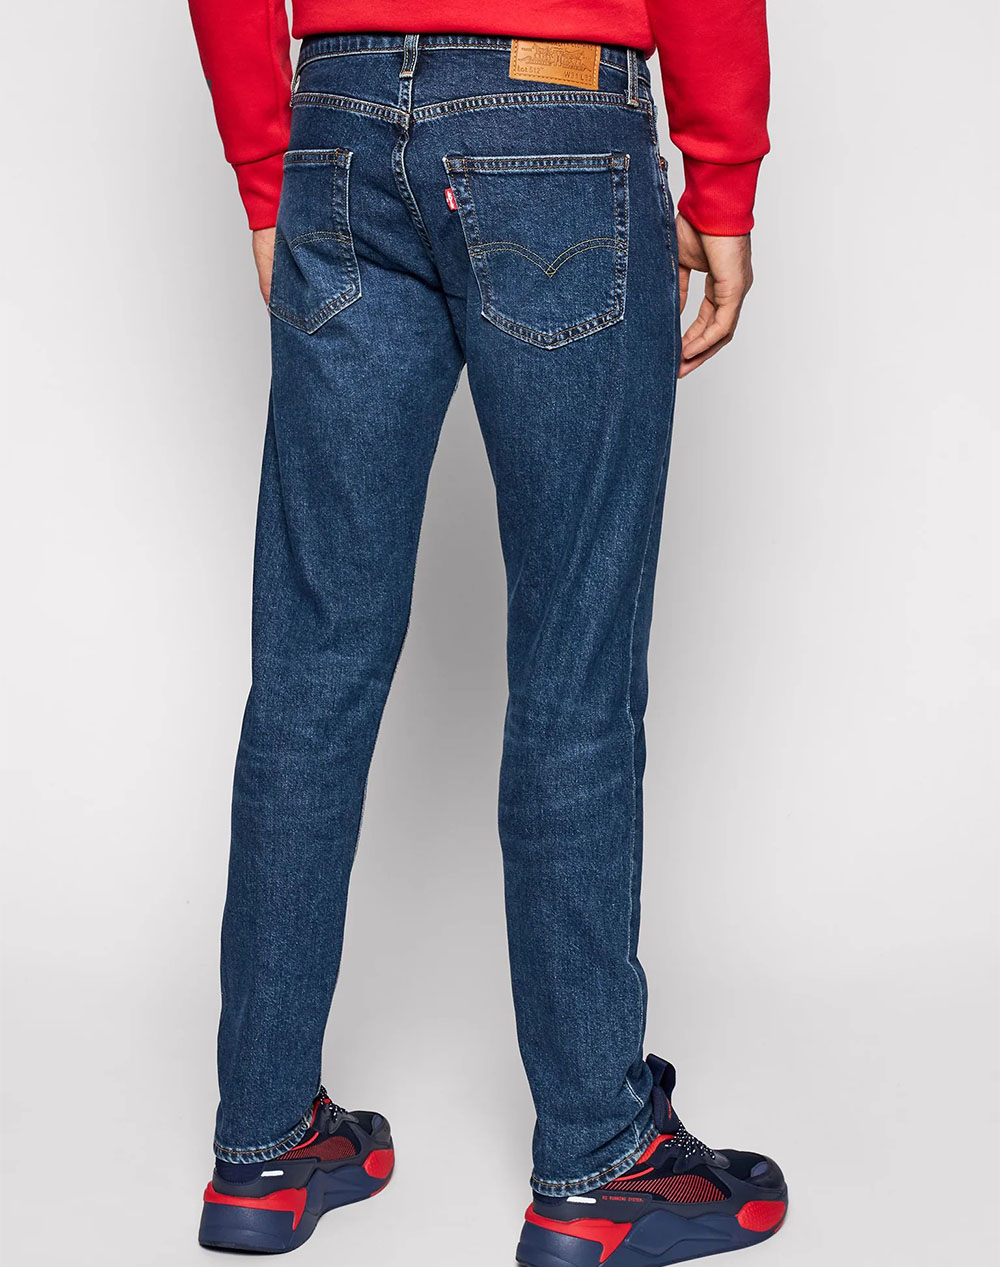 Levis 512 SLIM TAPER FIT  Slim fit jeans  nightshineblack denim   Zalandocouk